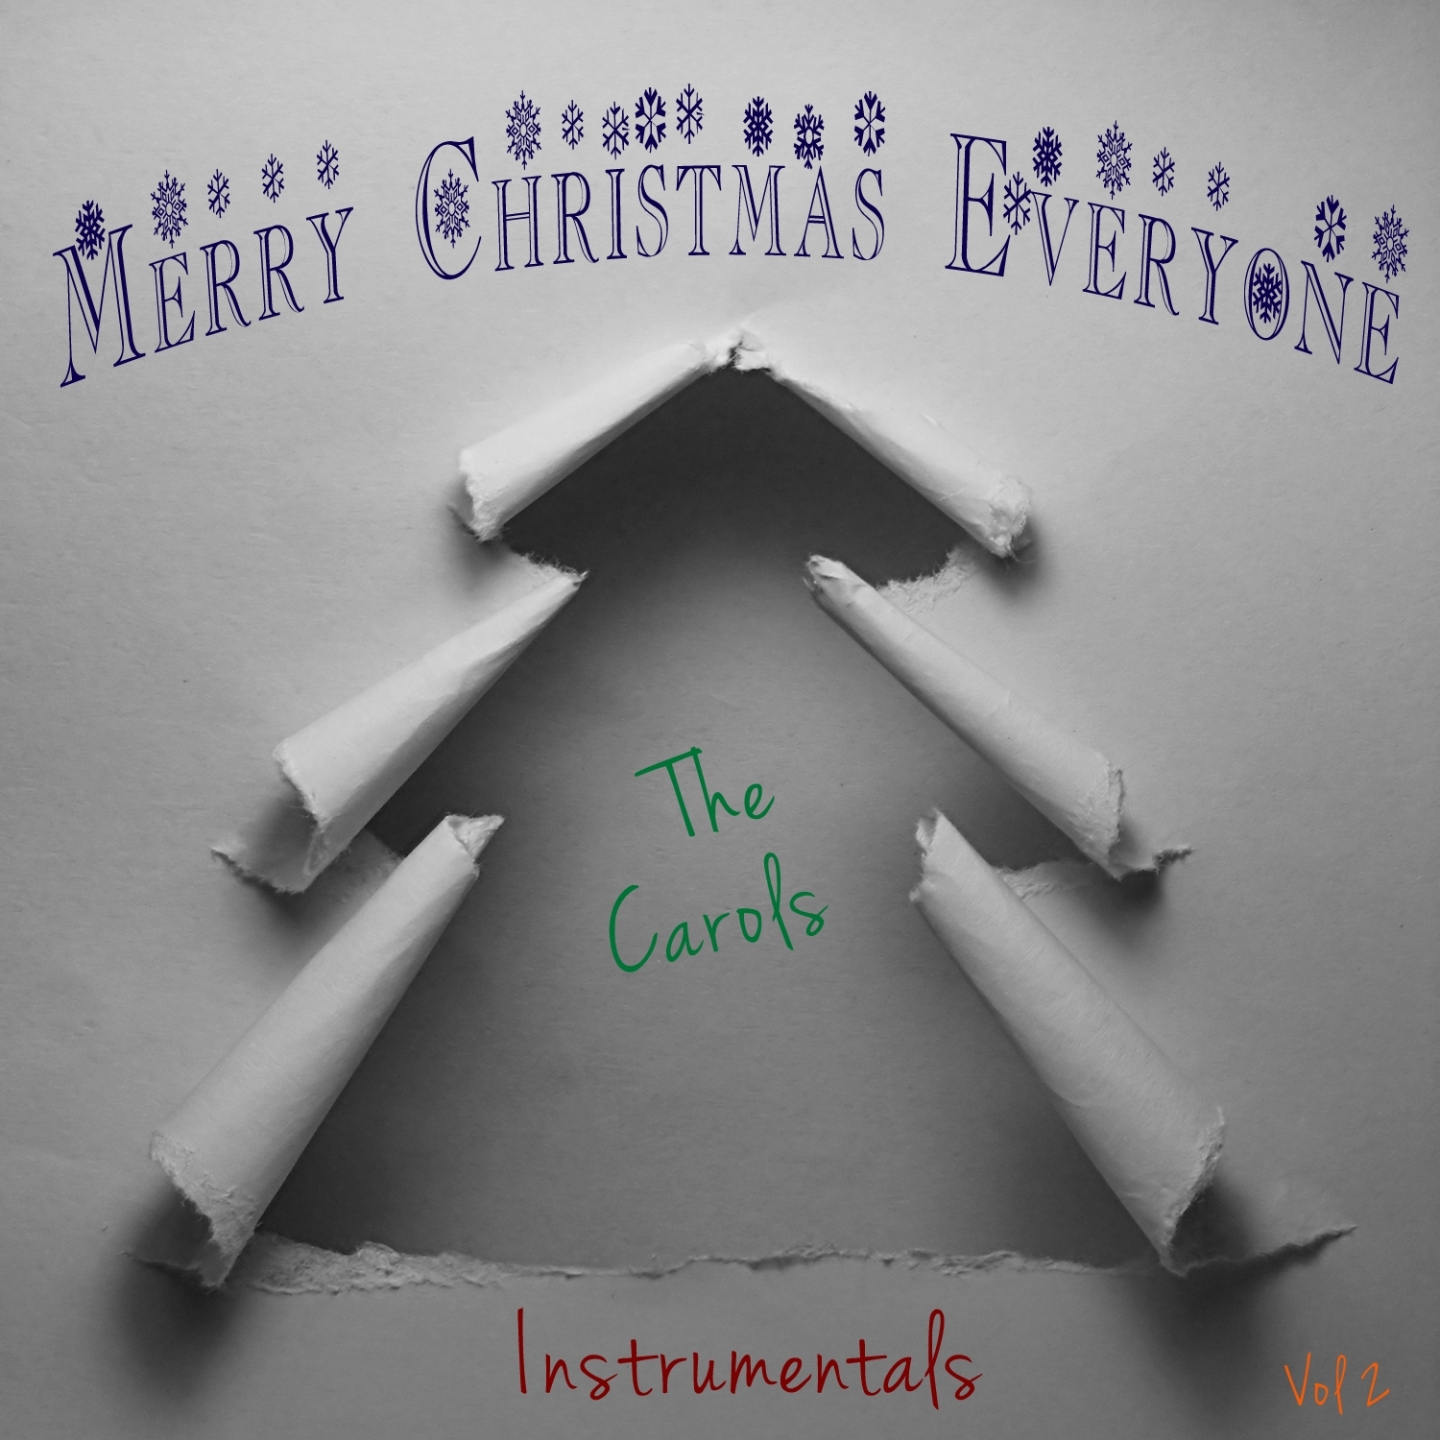 Merry Christmas Everyone - The Carols - Instrumentals Vol. 2